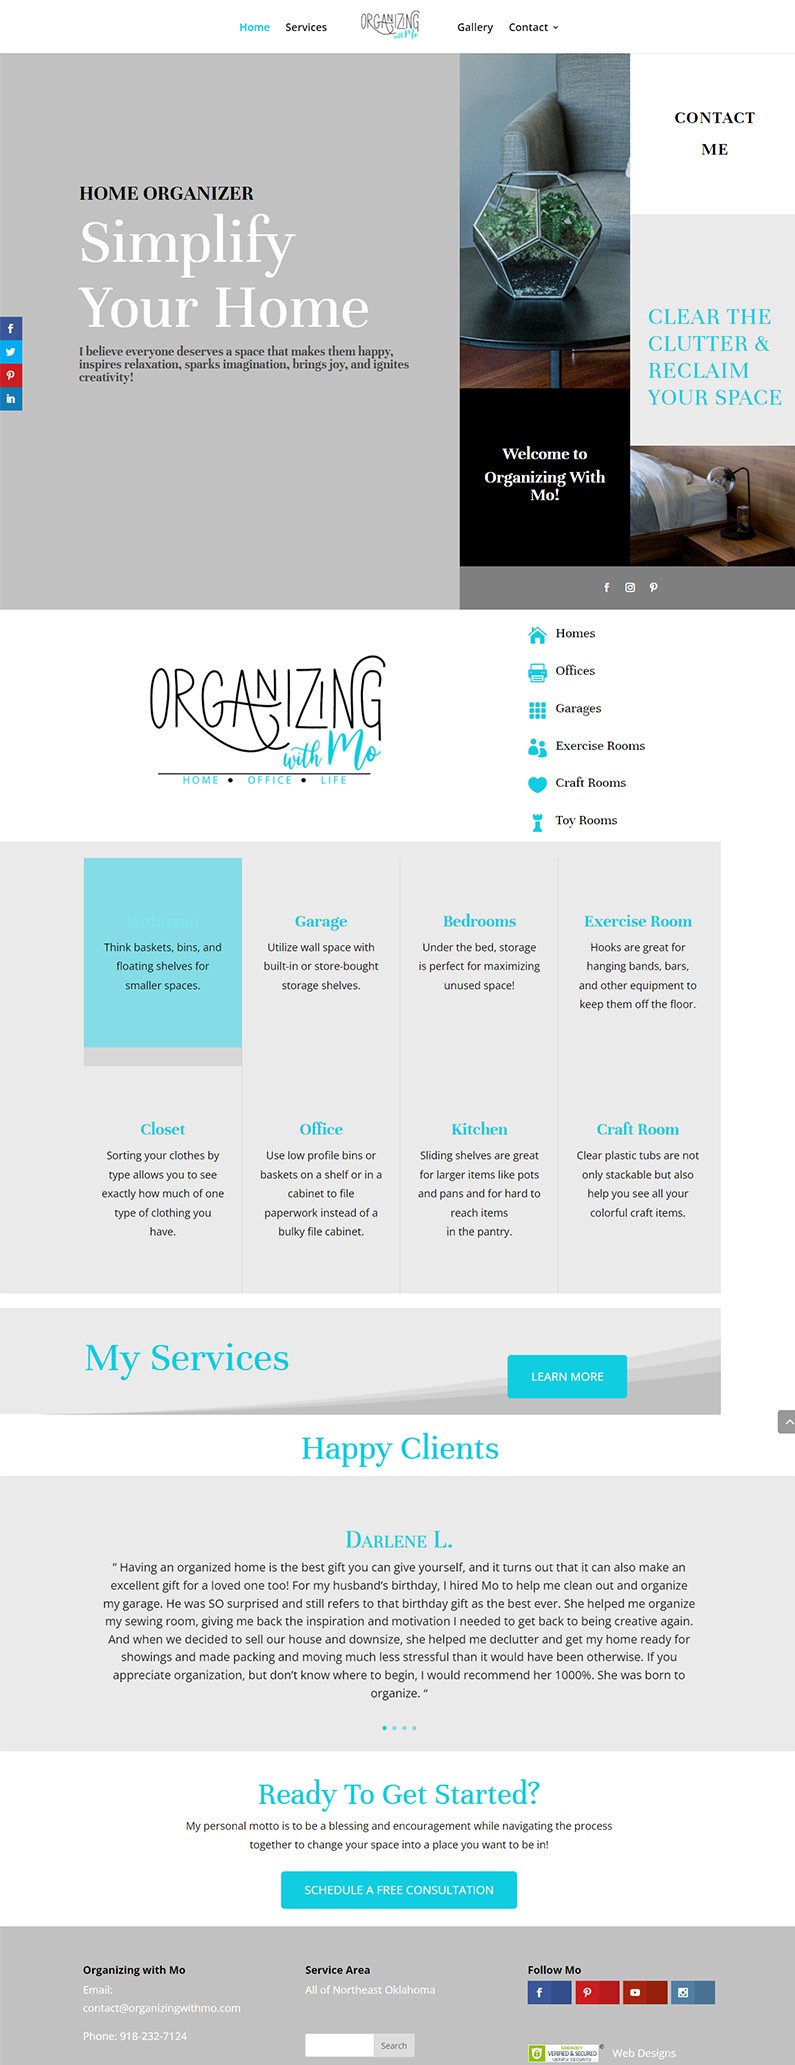 Home Organizer Website Design